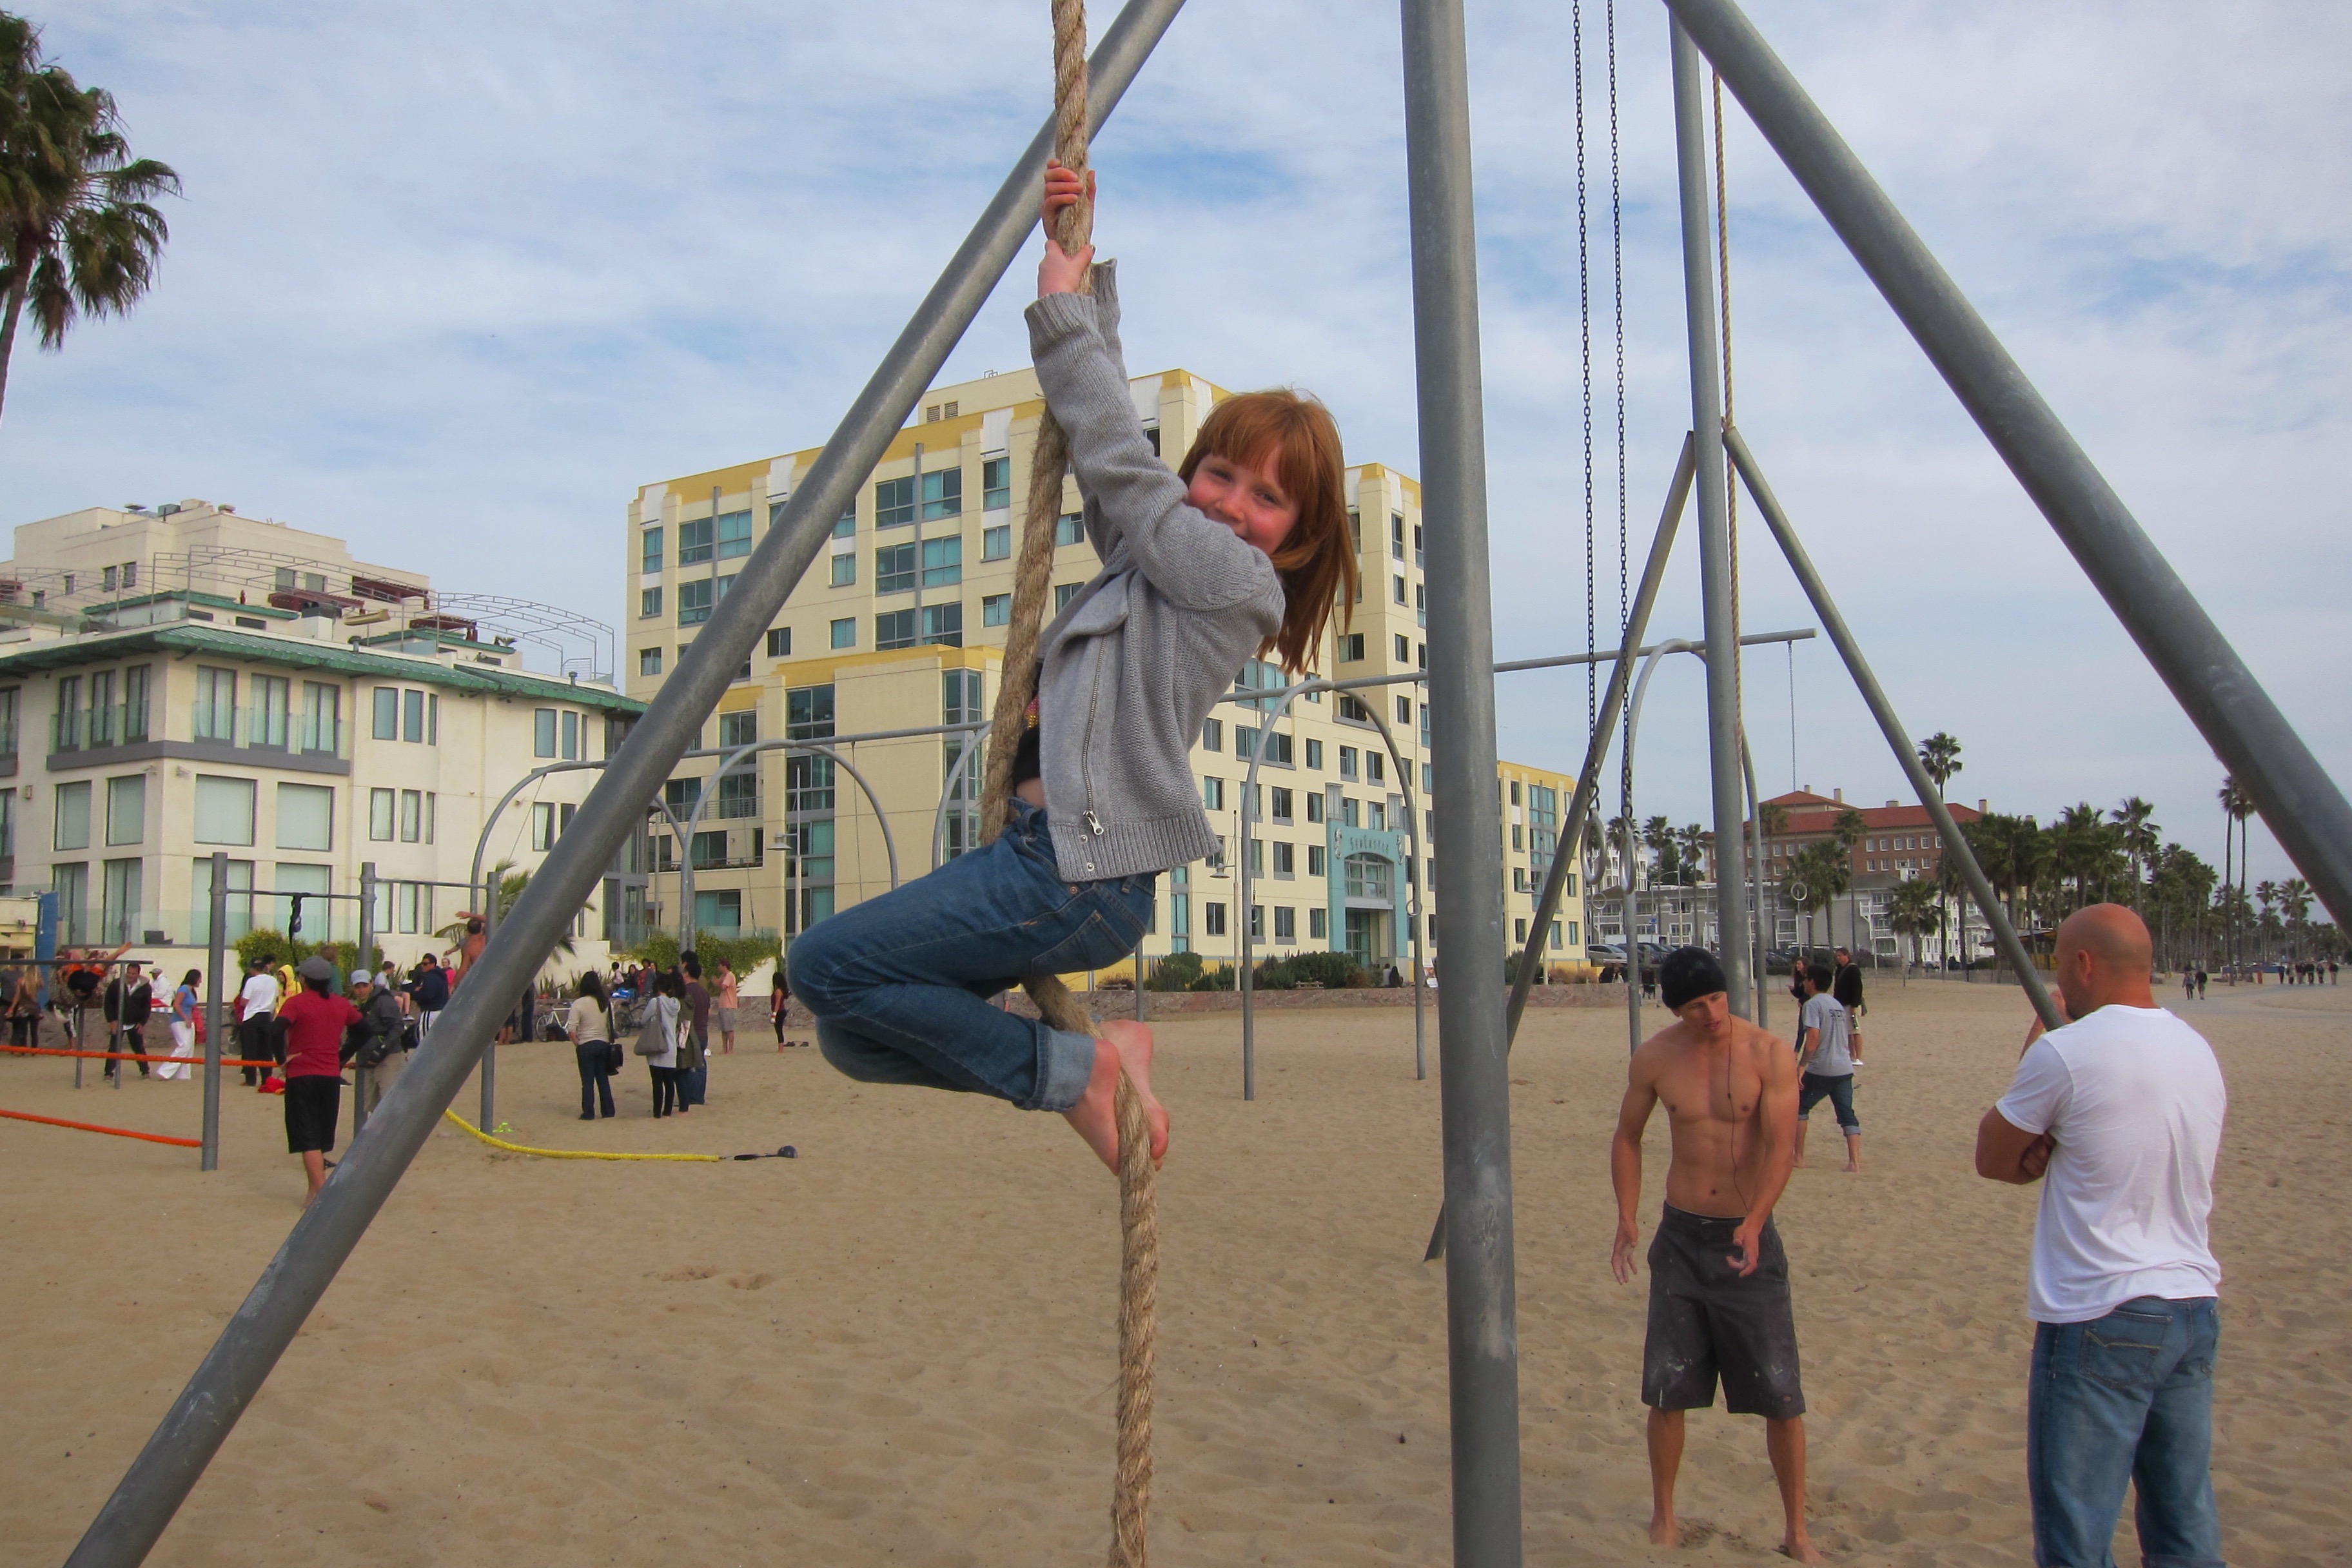 Venice Beach playgrounds